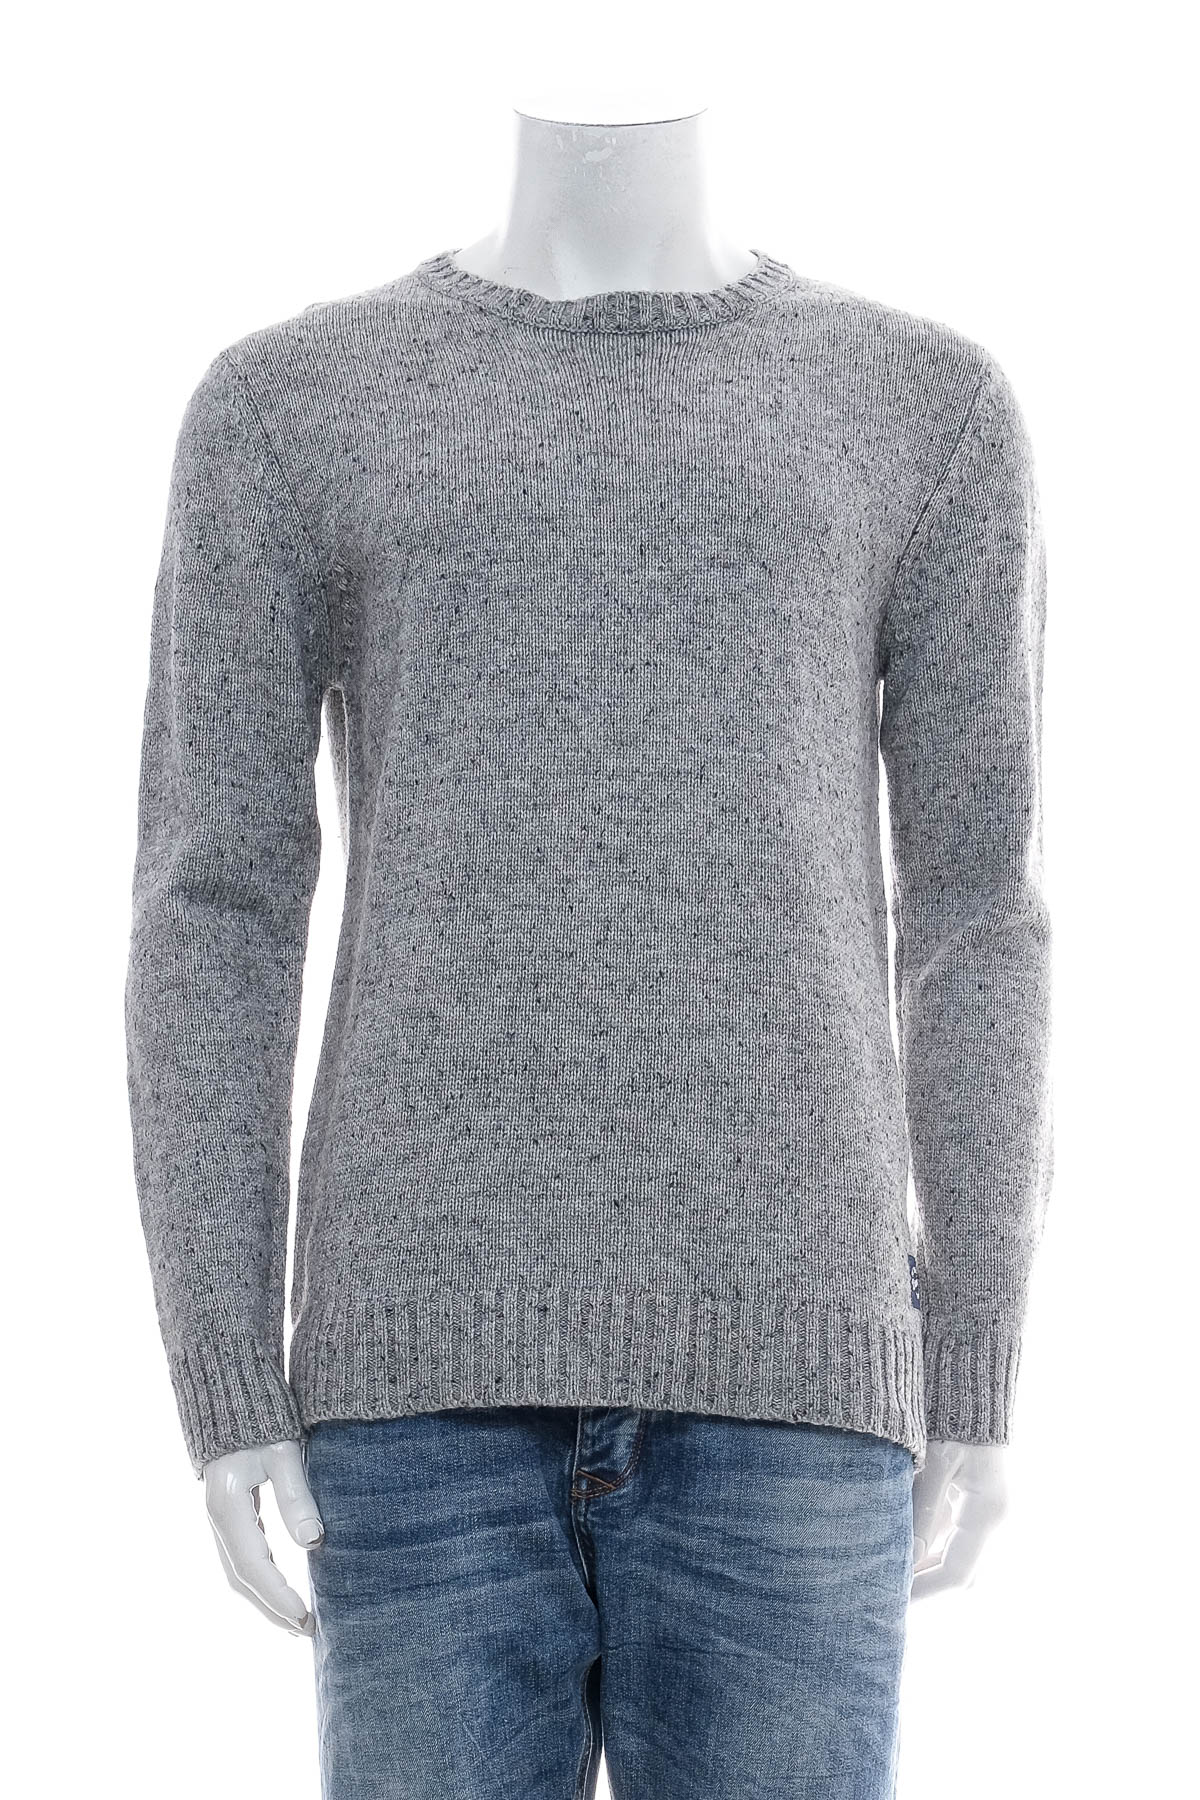 Men's sweater - THE 1964 Denim COMPANY - 0